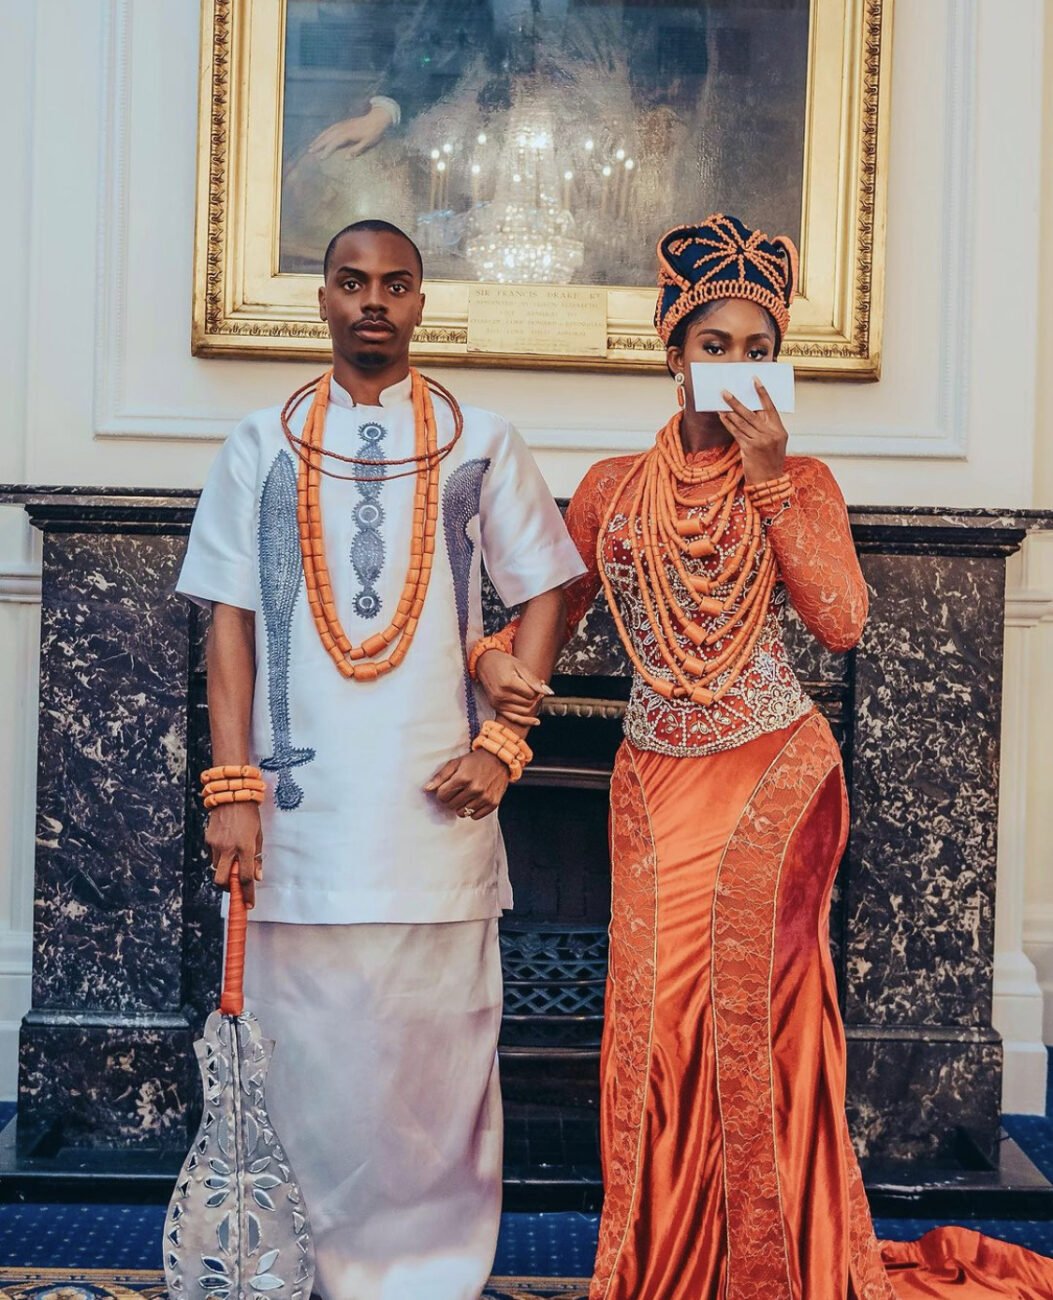 Enioluwa Adeoluwa and Priscilla Ojo in matching Edo/Benin cultural outfits.